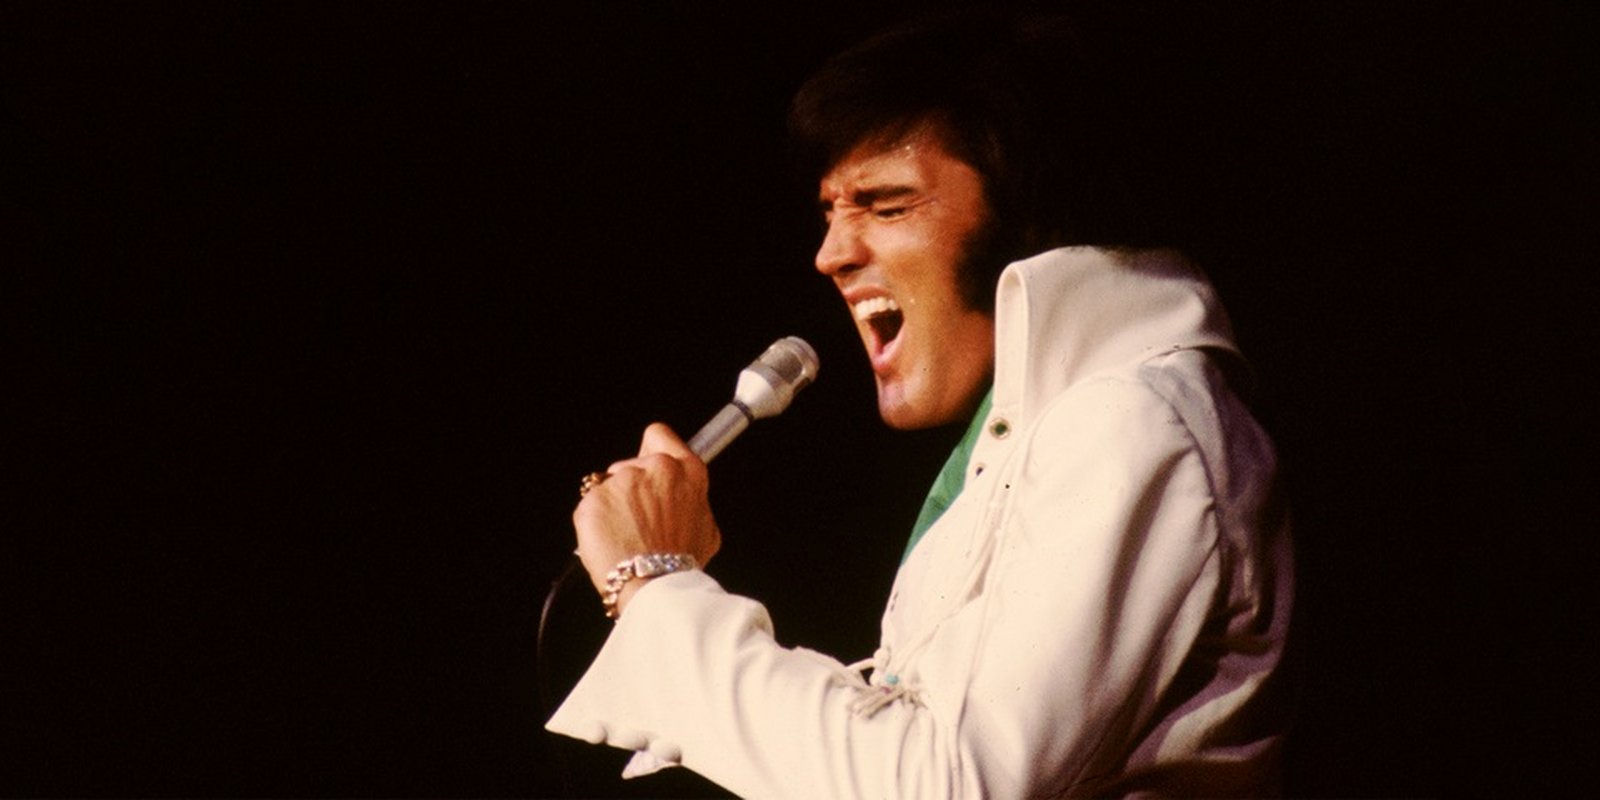 Elvis - That's the Way It Is